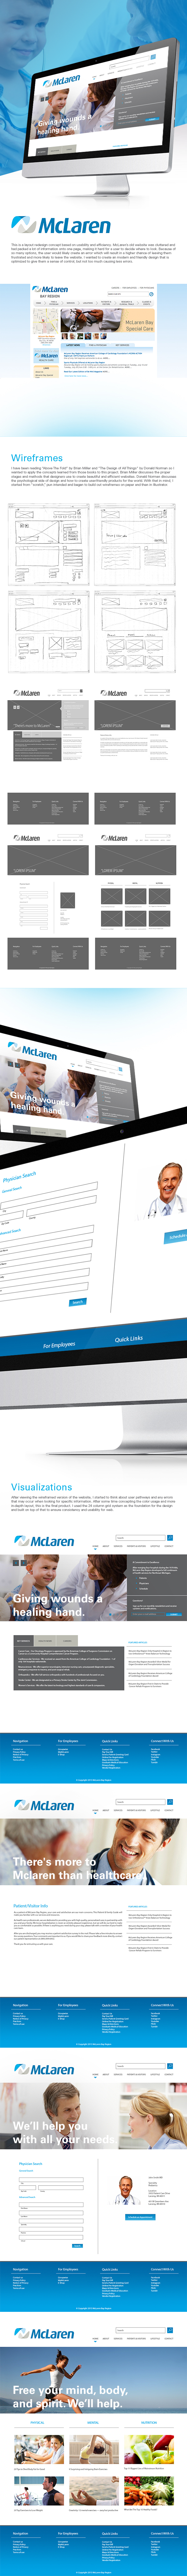 McLaren Health healthcare Website redesign Rebrand user interface user experience visual visual design Lansing lansing healthcare medical